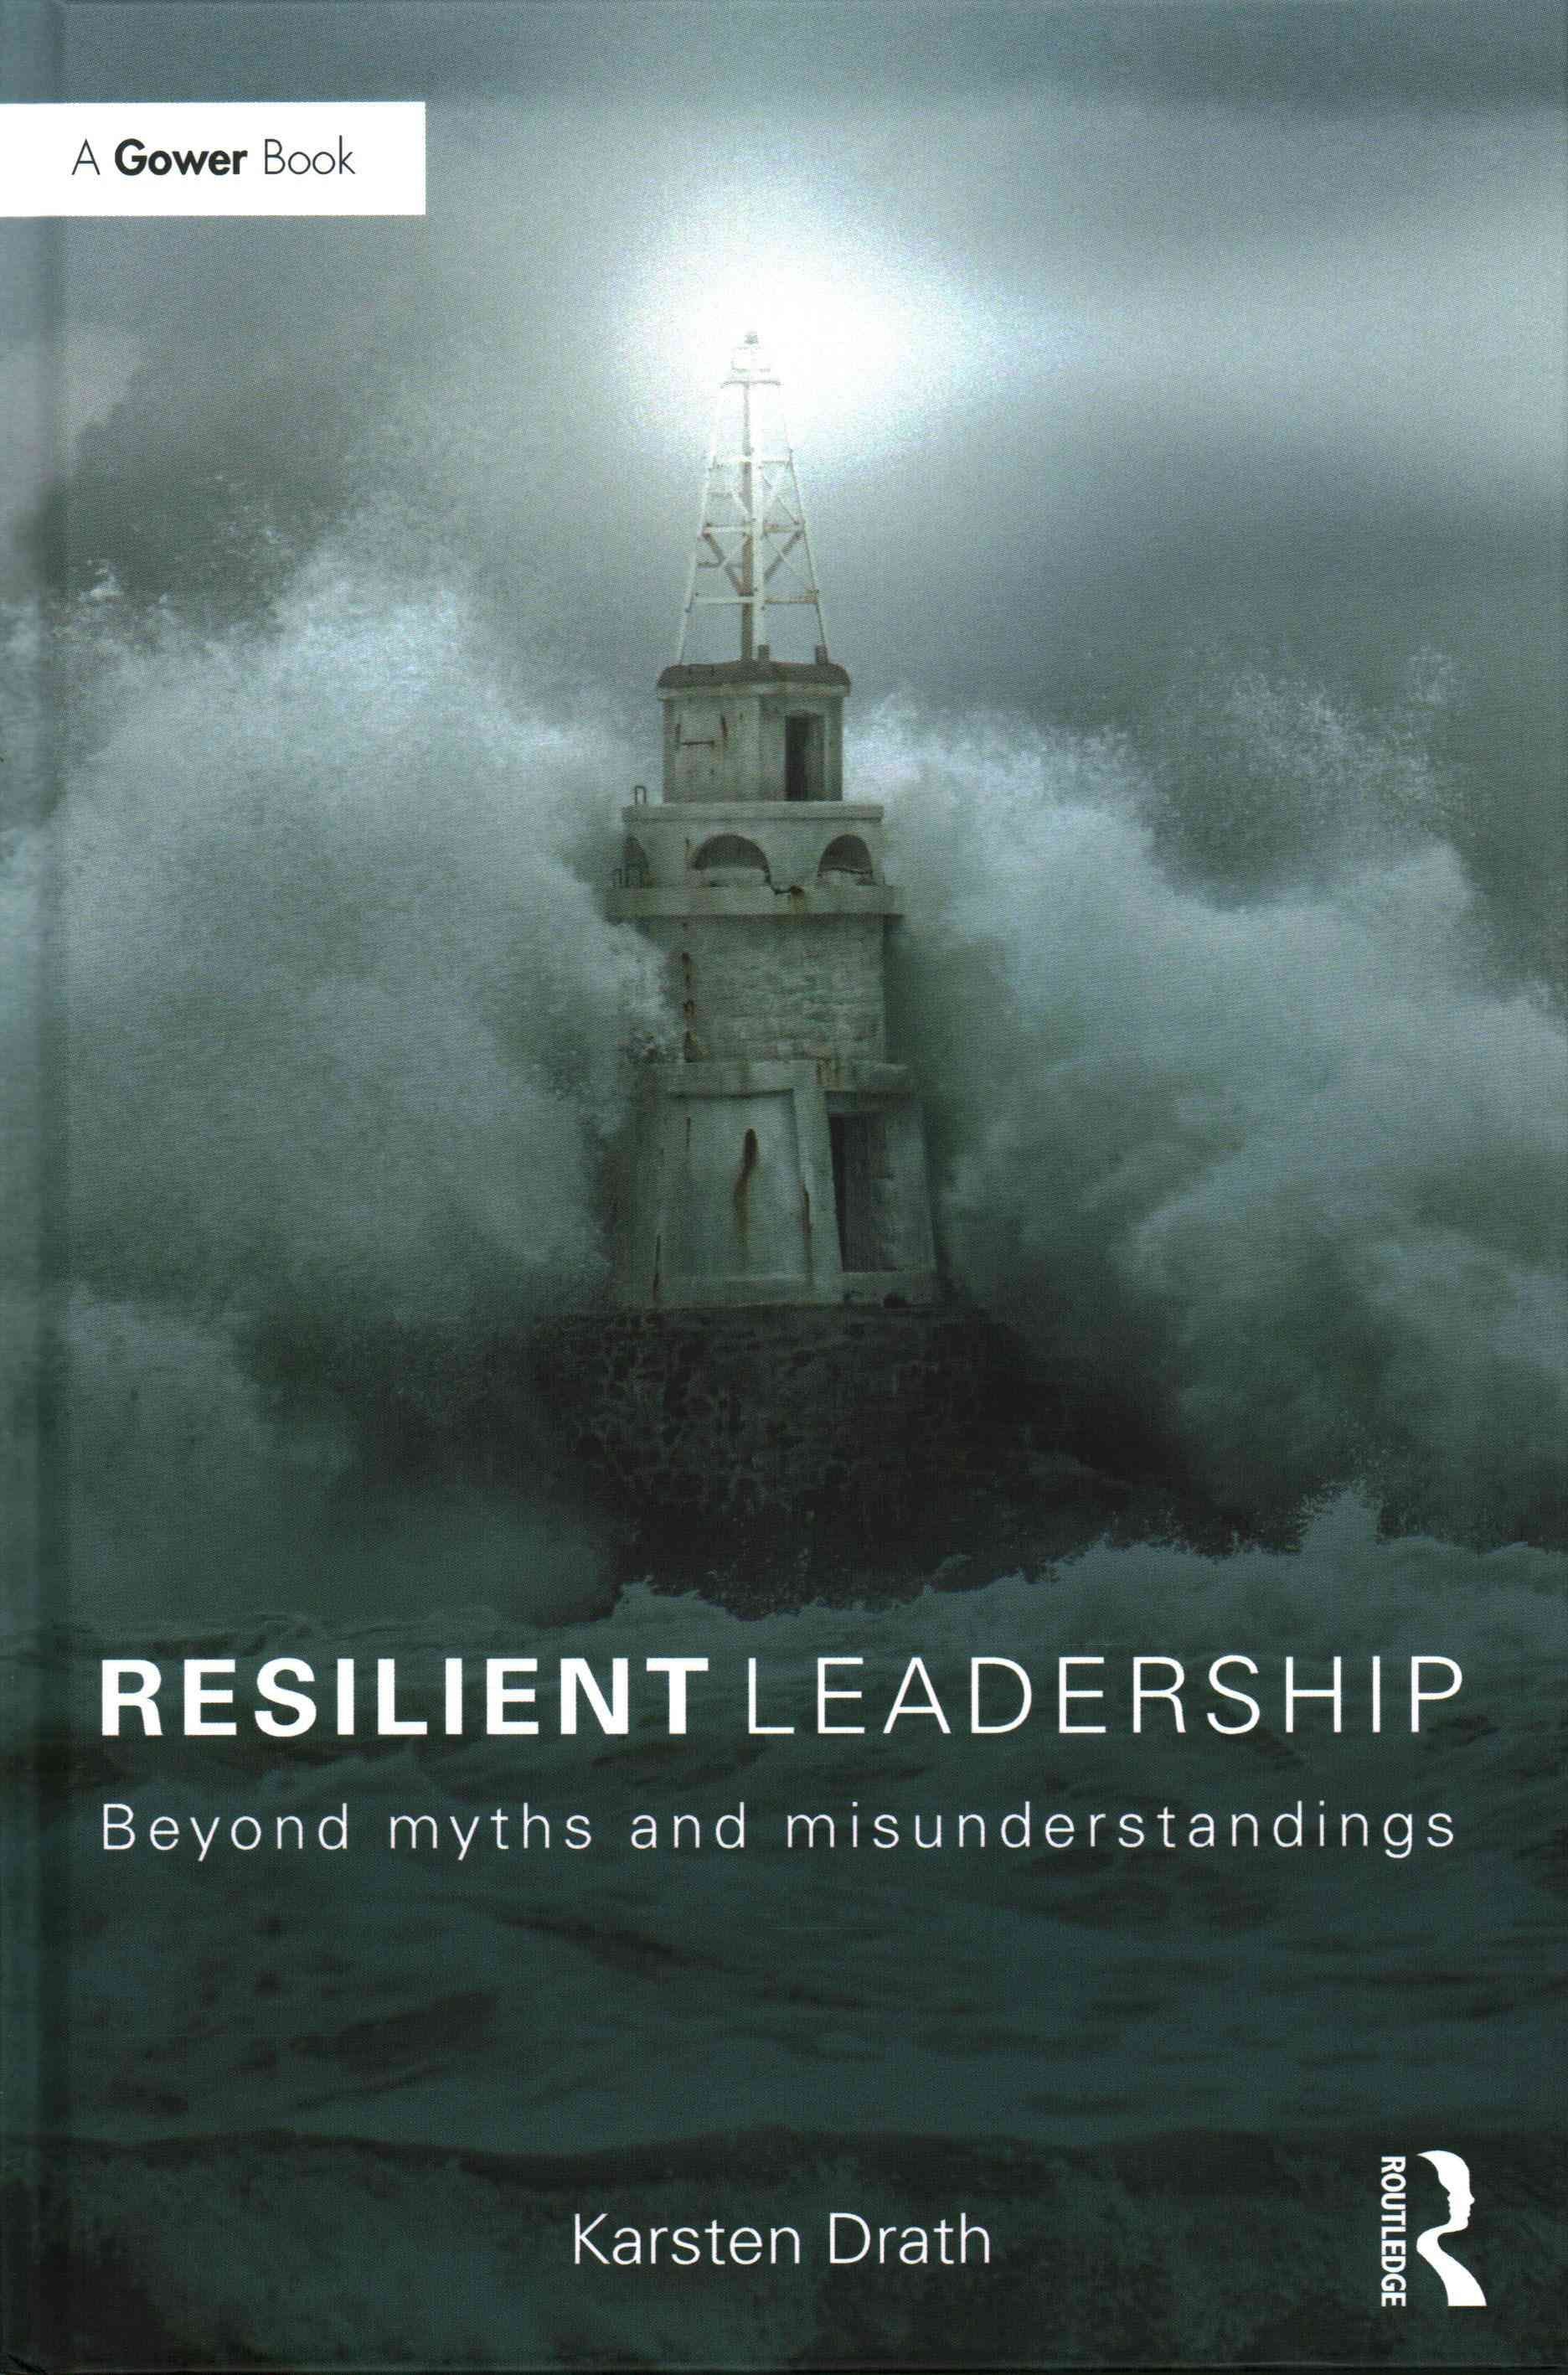 Resilient Leadership